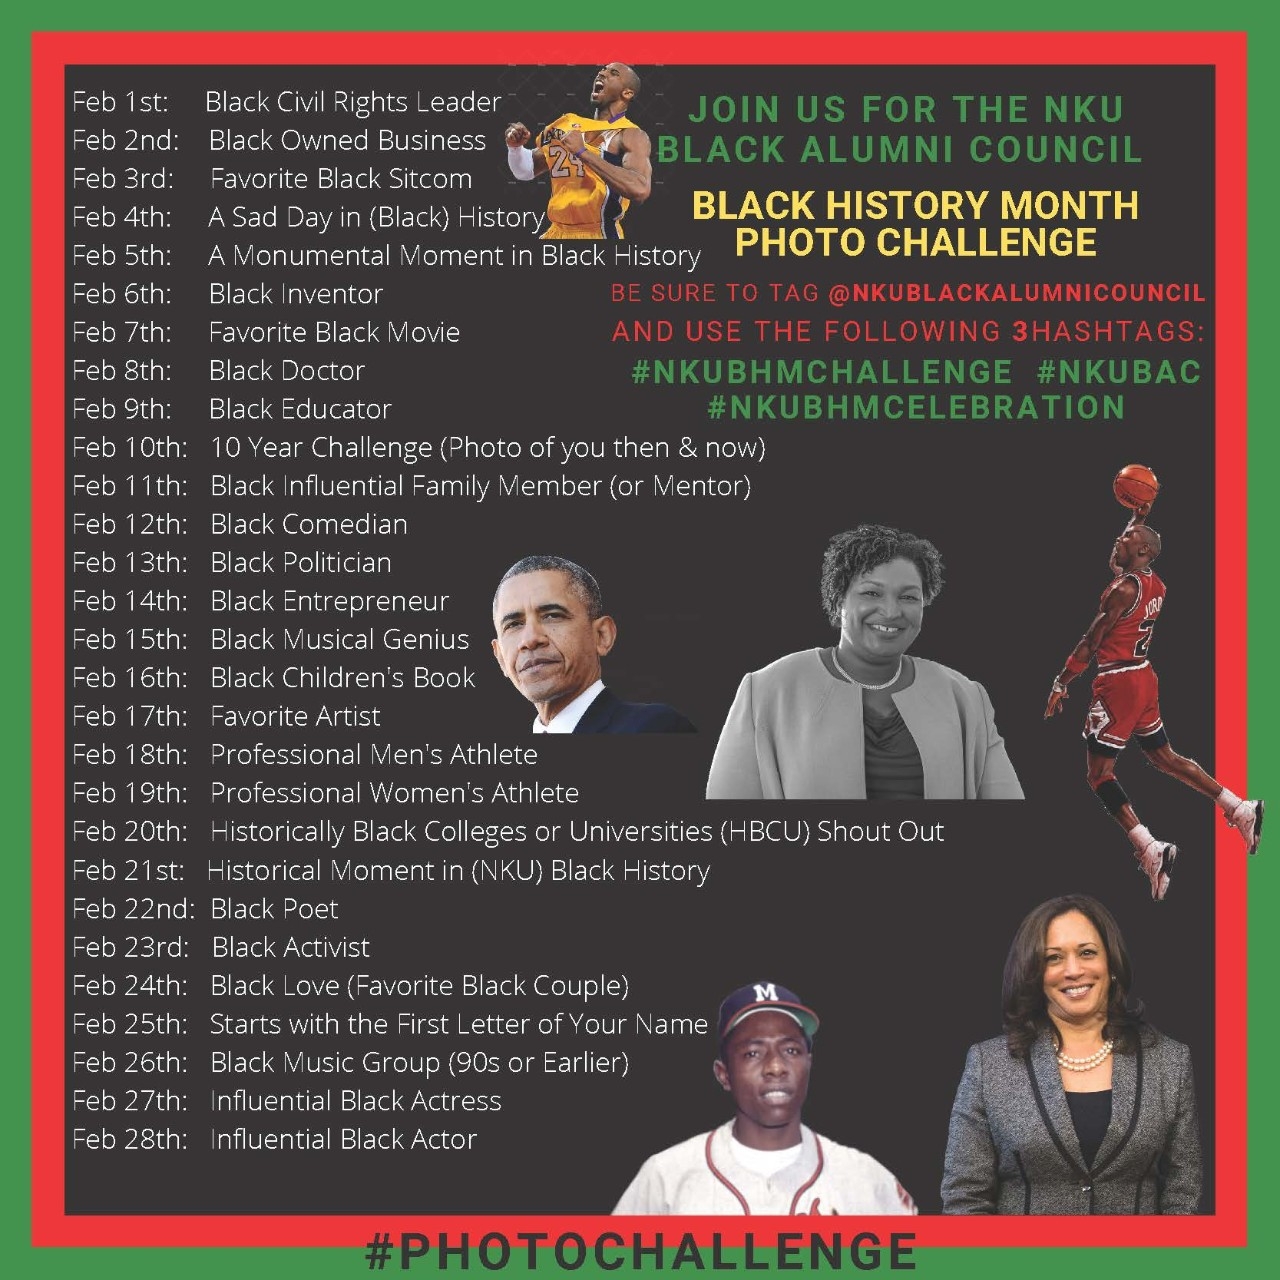 Black History Month Photo Challenge